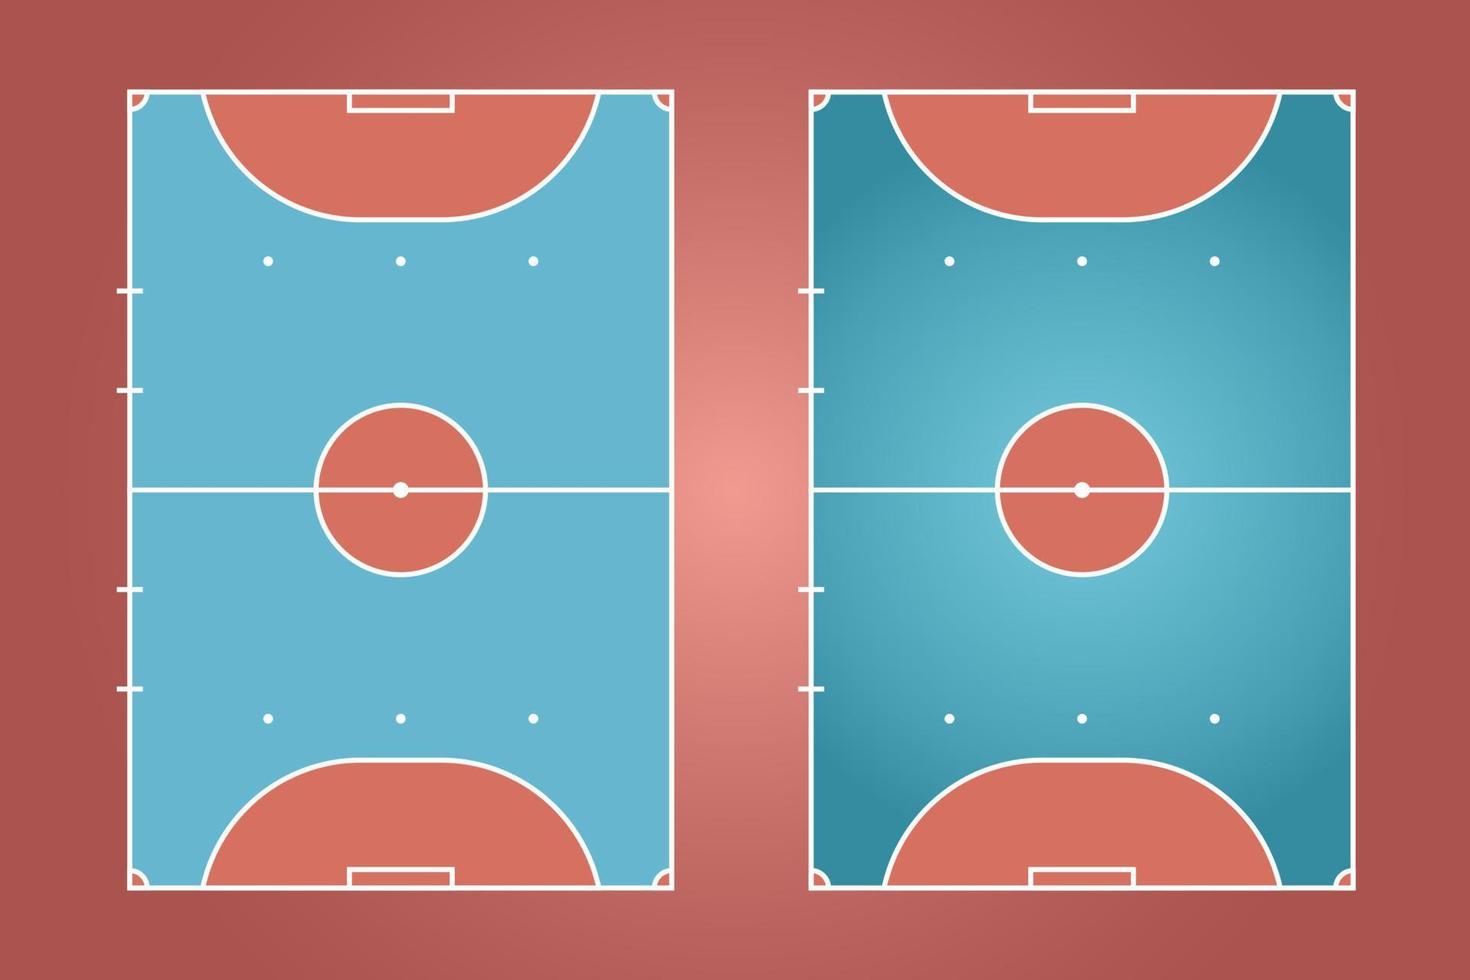 Futsal field flat design, Football field graphic illustration, Vector of futsal court and layout.